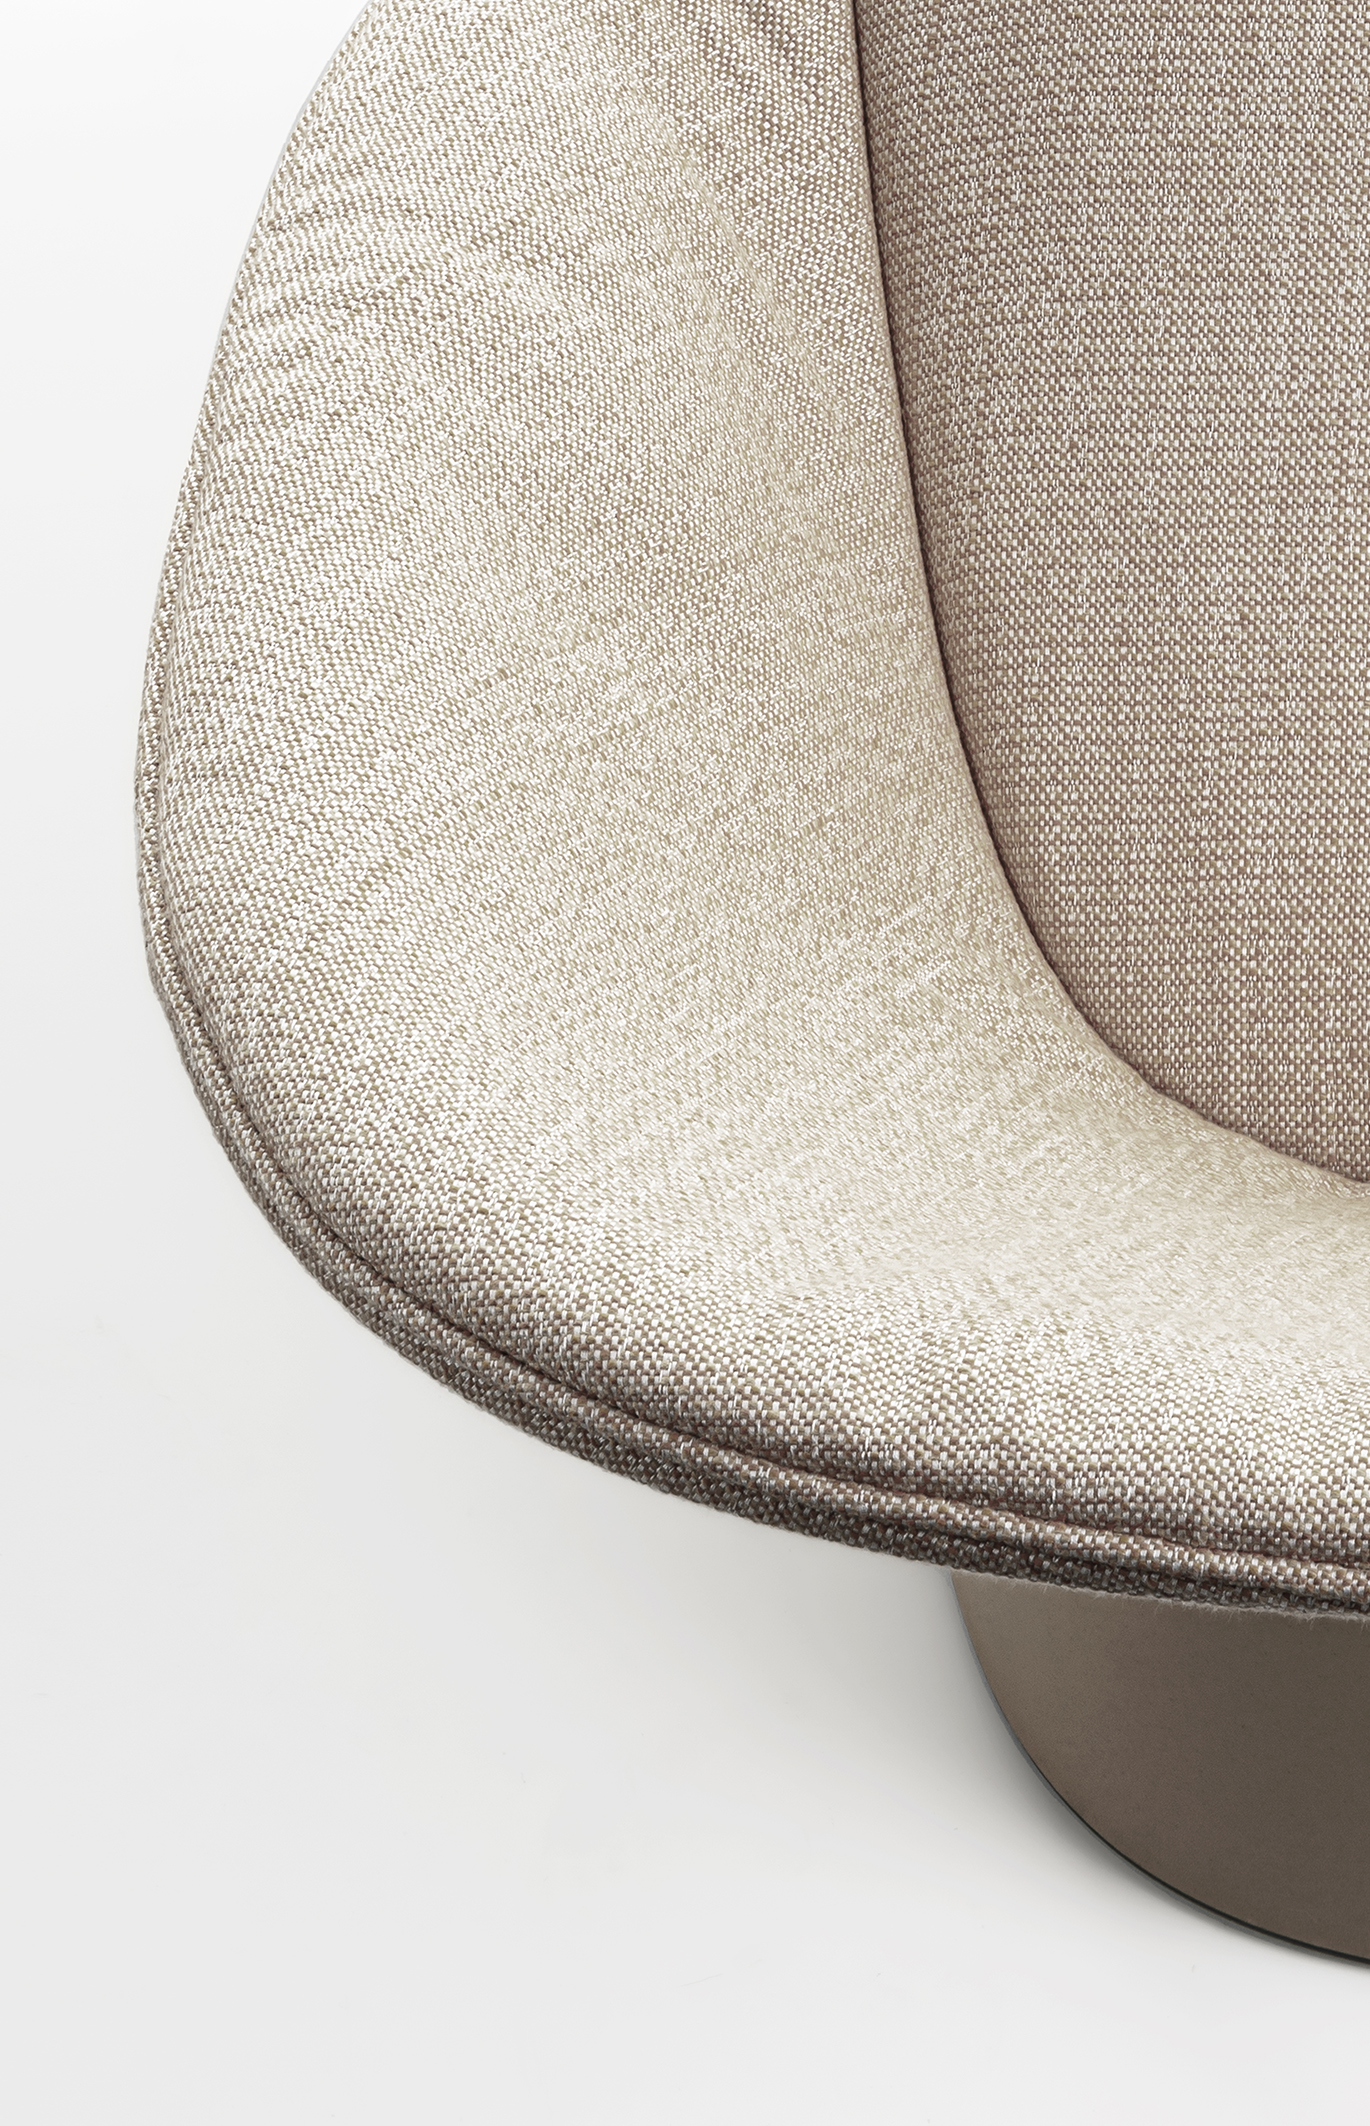 Sensu Lounge Chair Detail 03